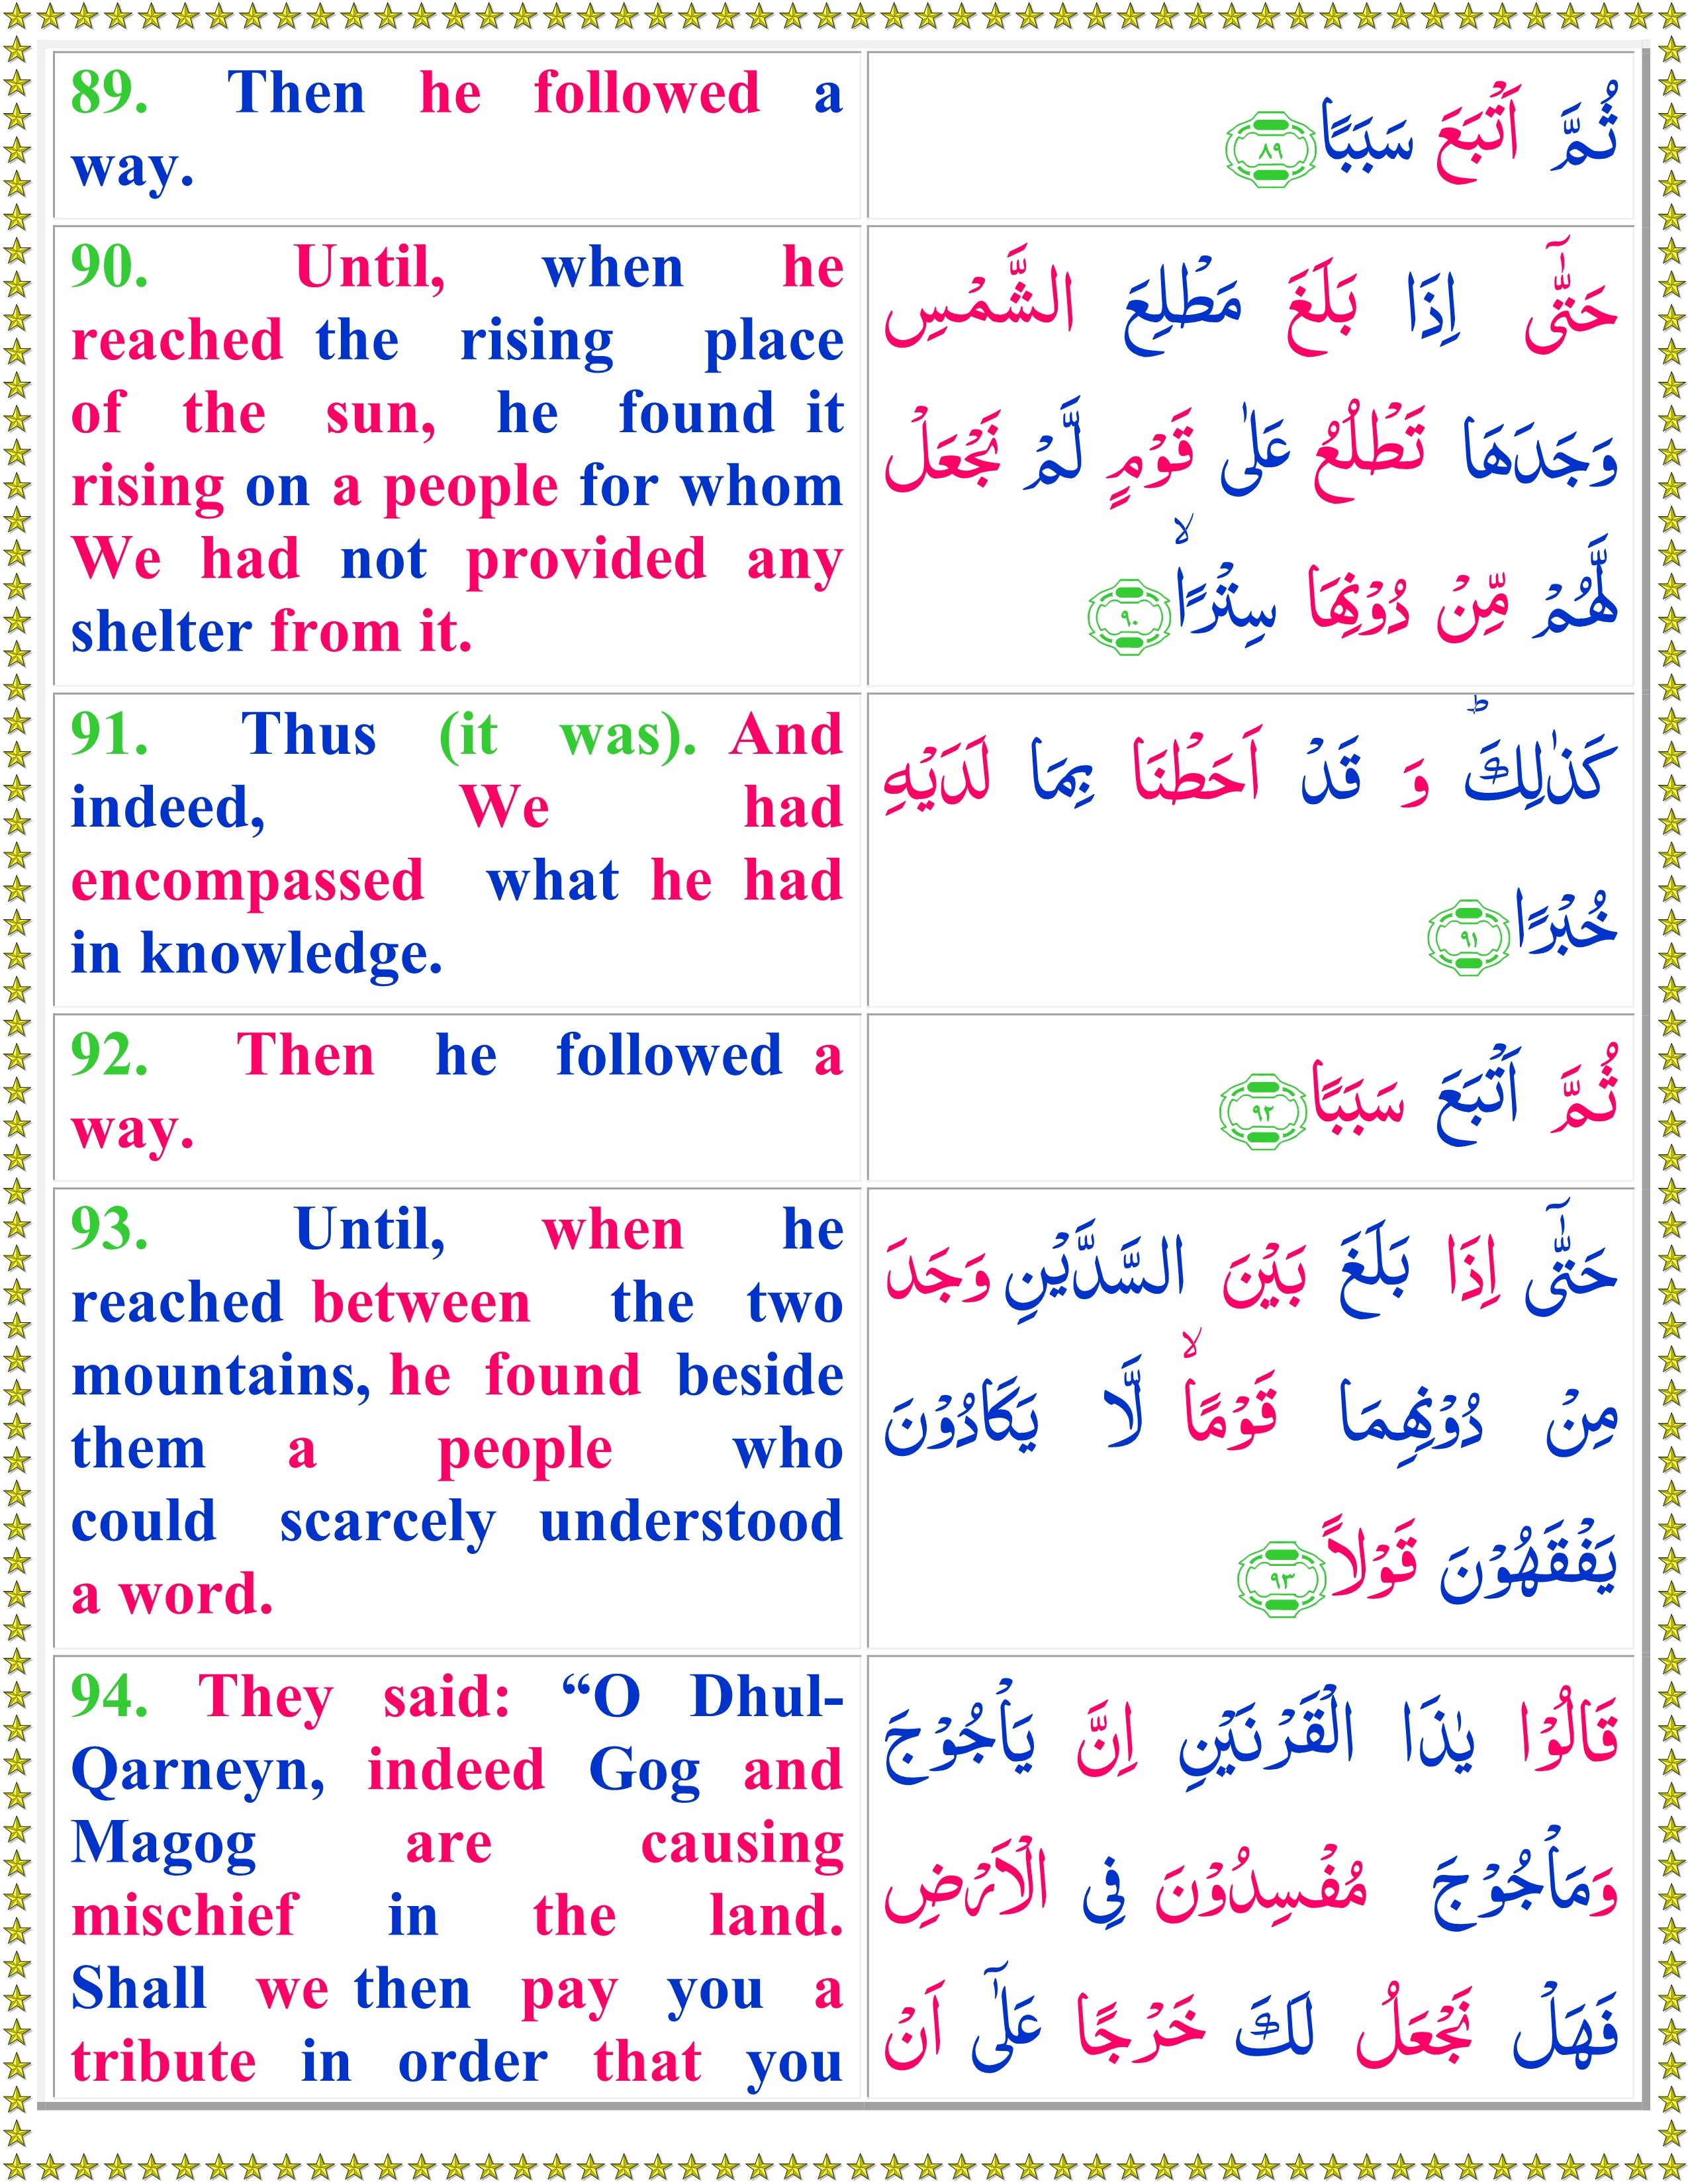 learn surah al kahf word by word